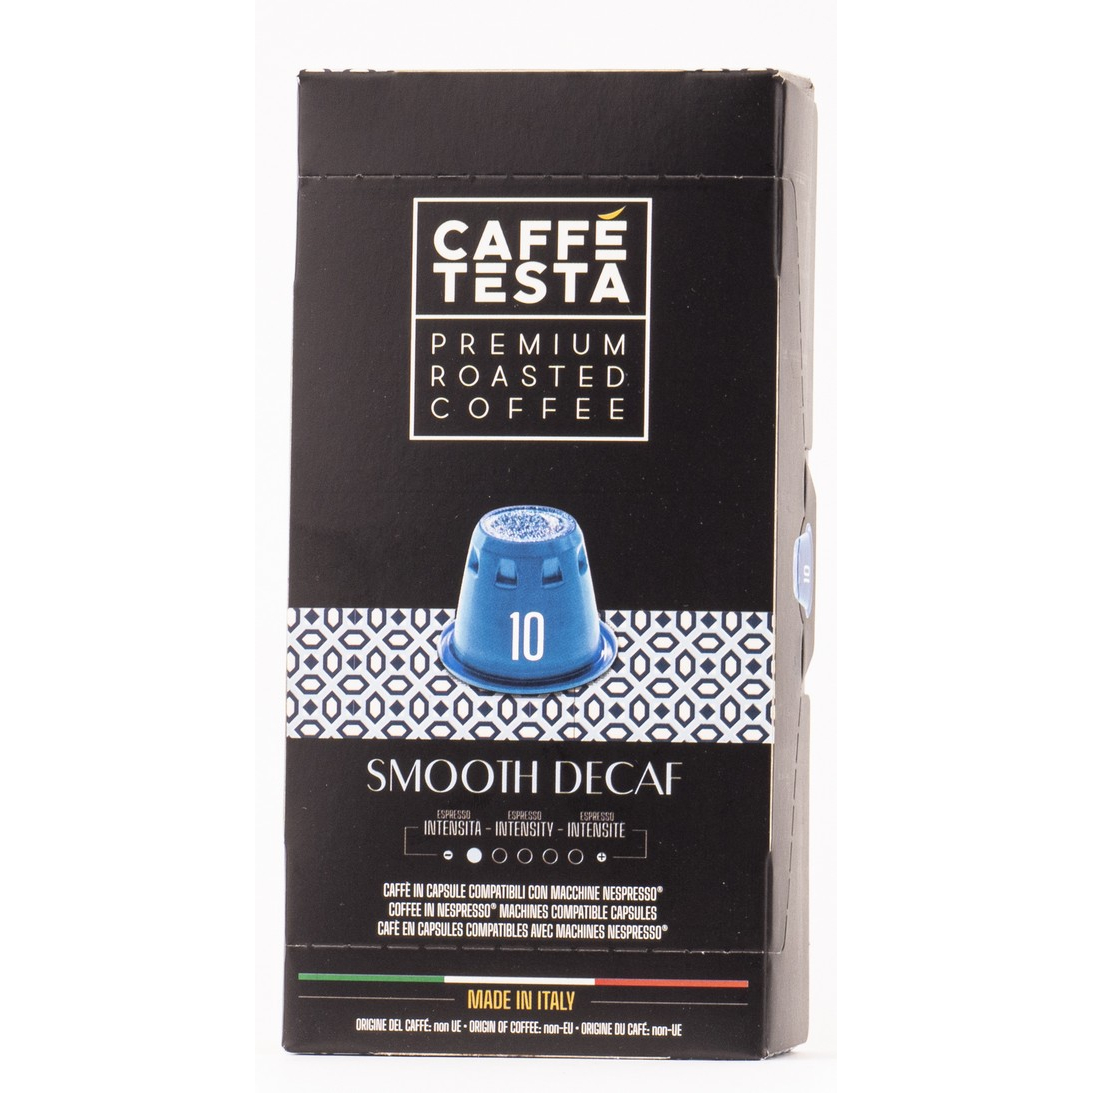 Кофе Caffe Testa Smooth Decaf в капсулах 70/30, 55 г кофе в капсулах diemme caffe corpo 50 шт